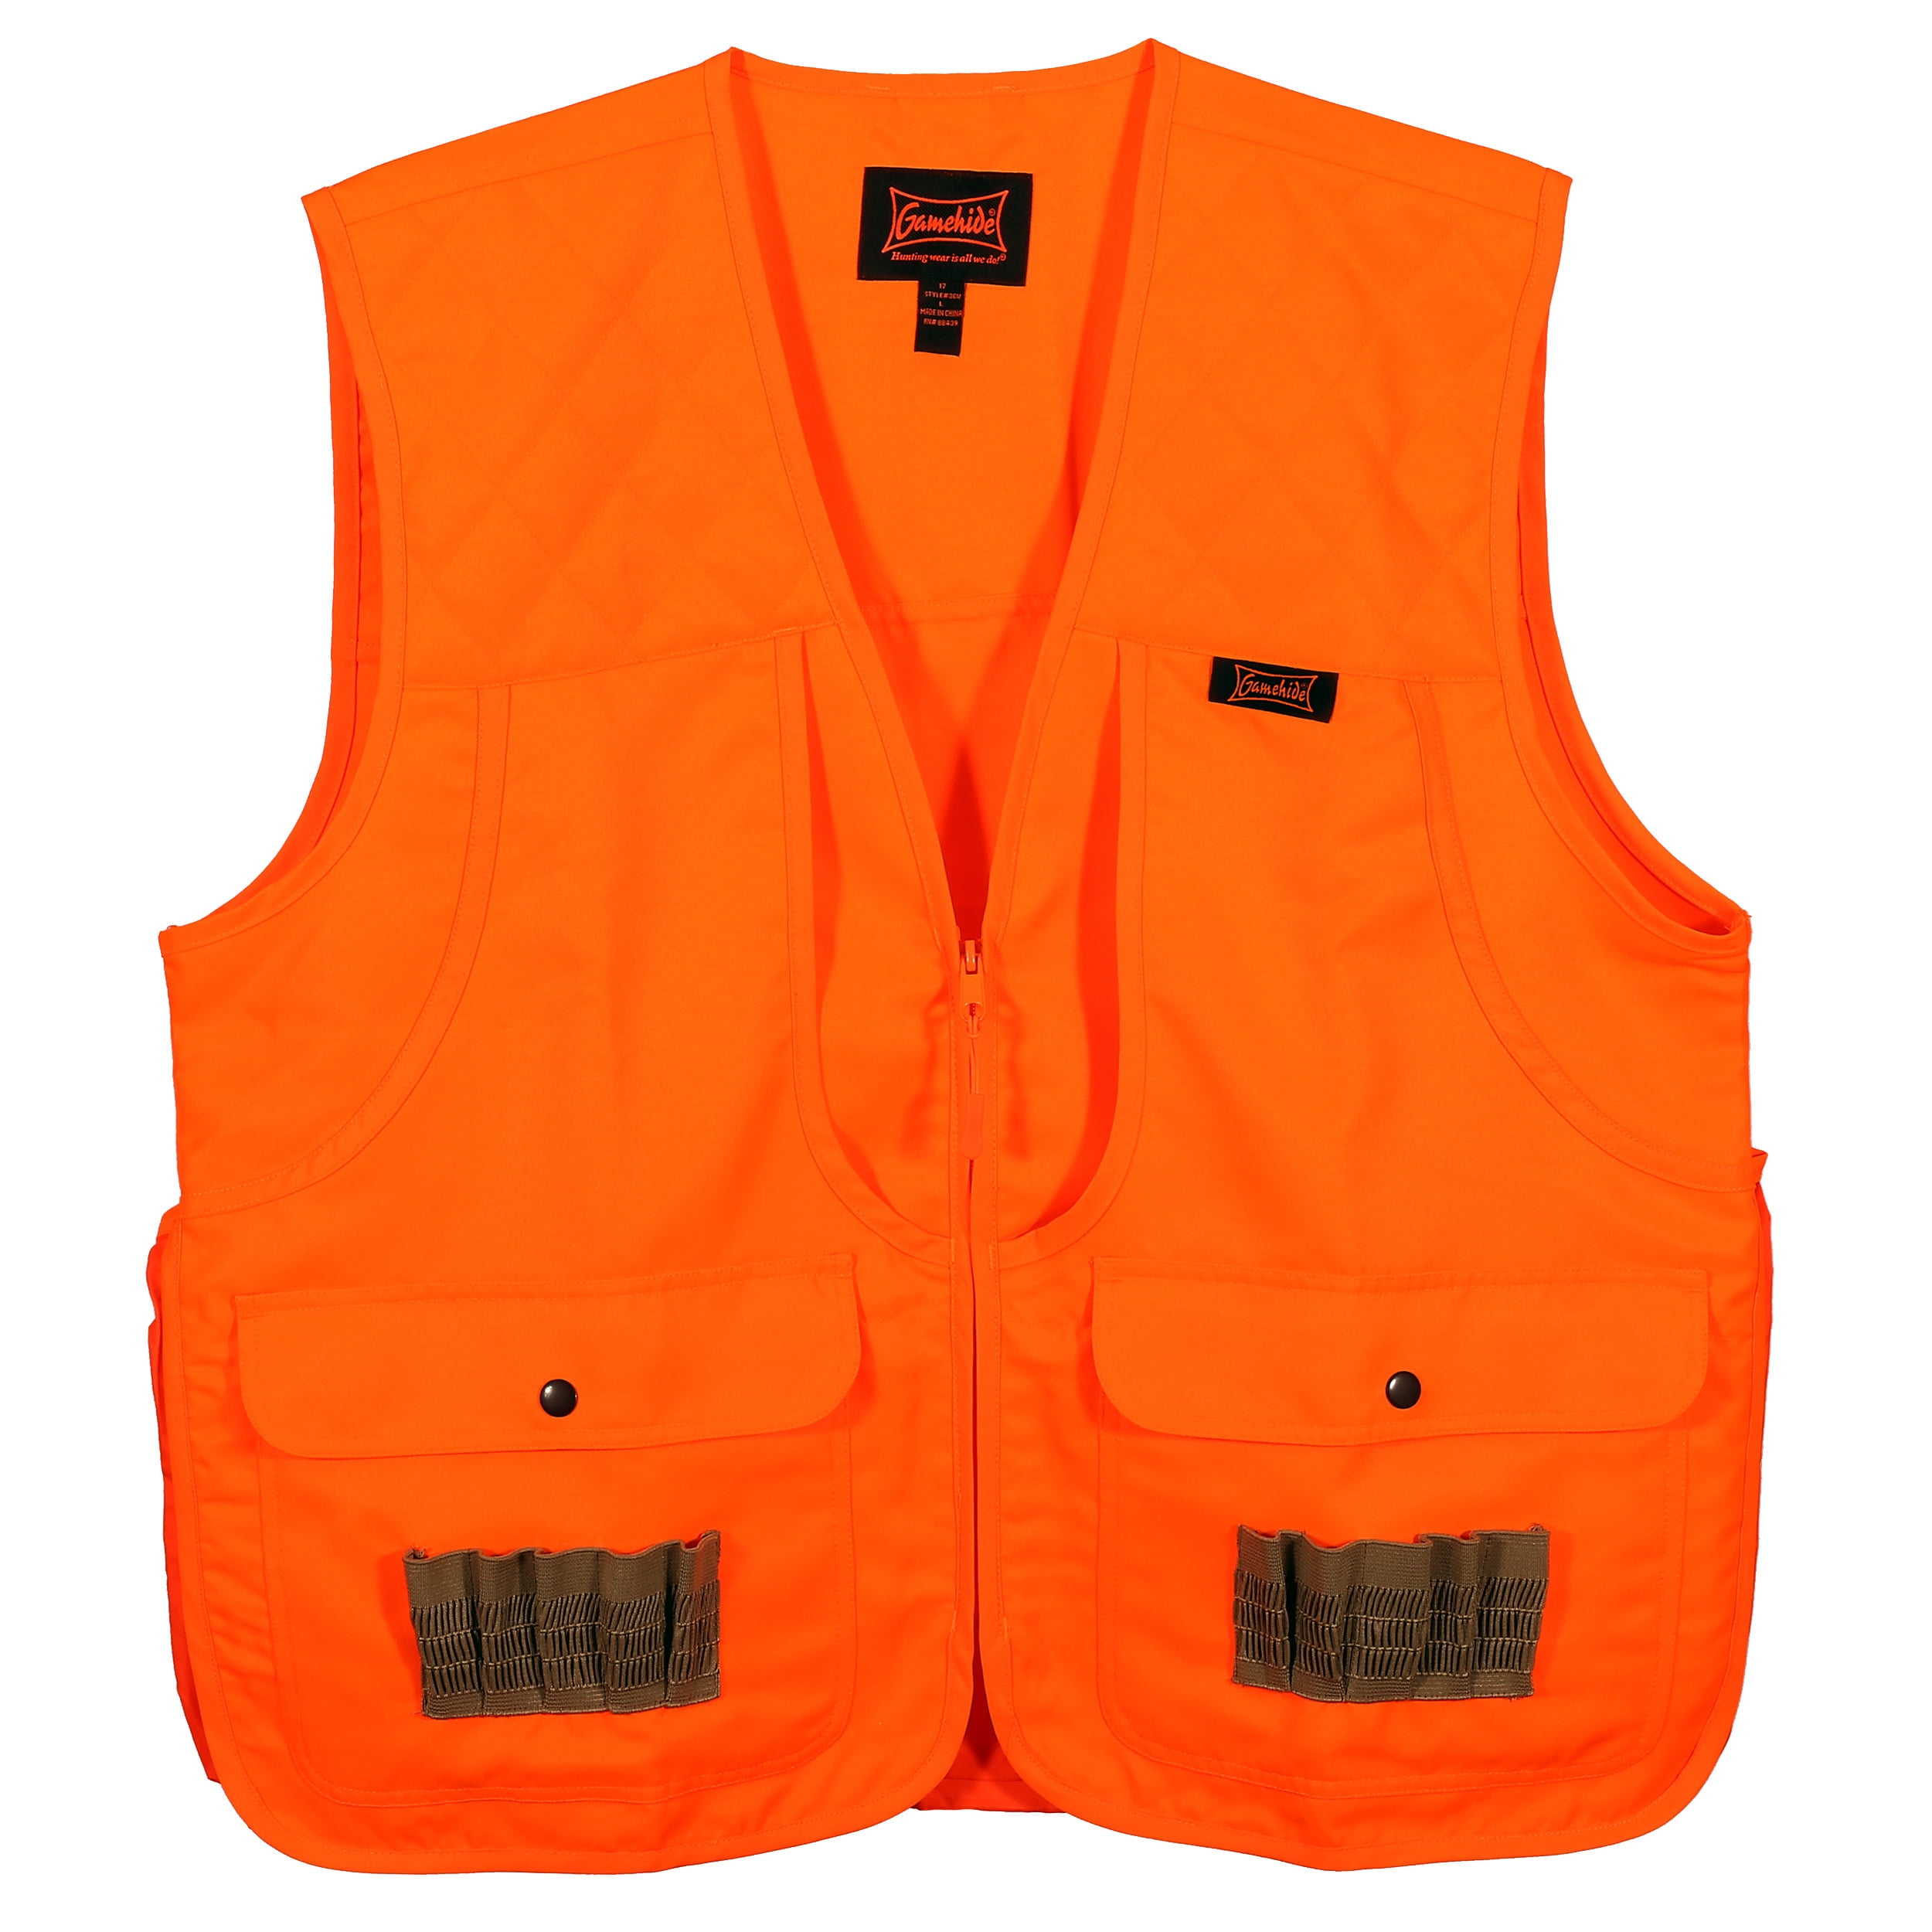 SwedTeam Dog keepers vest Blaze Medium Orange Medium Orange 